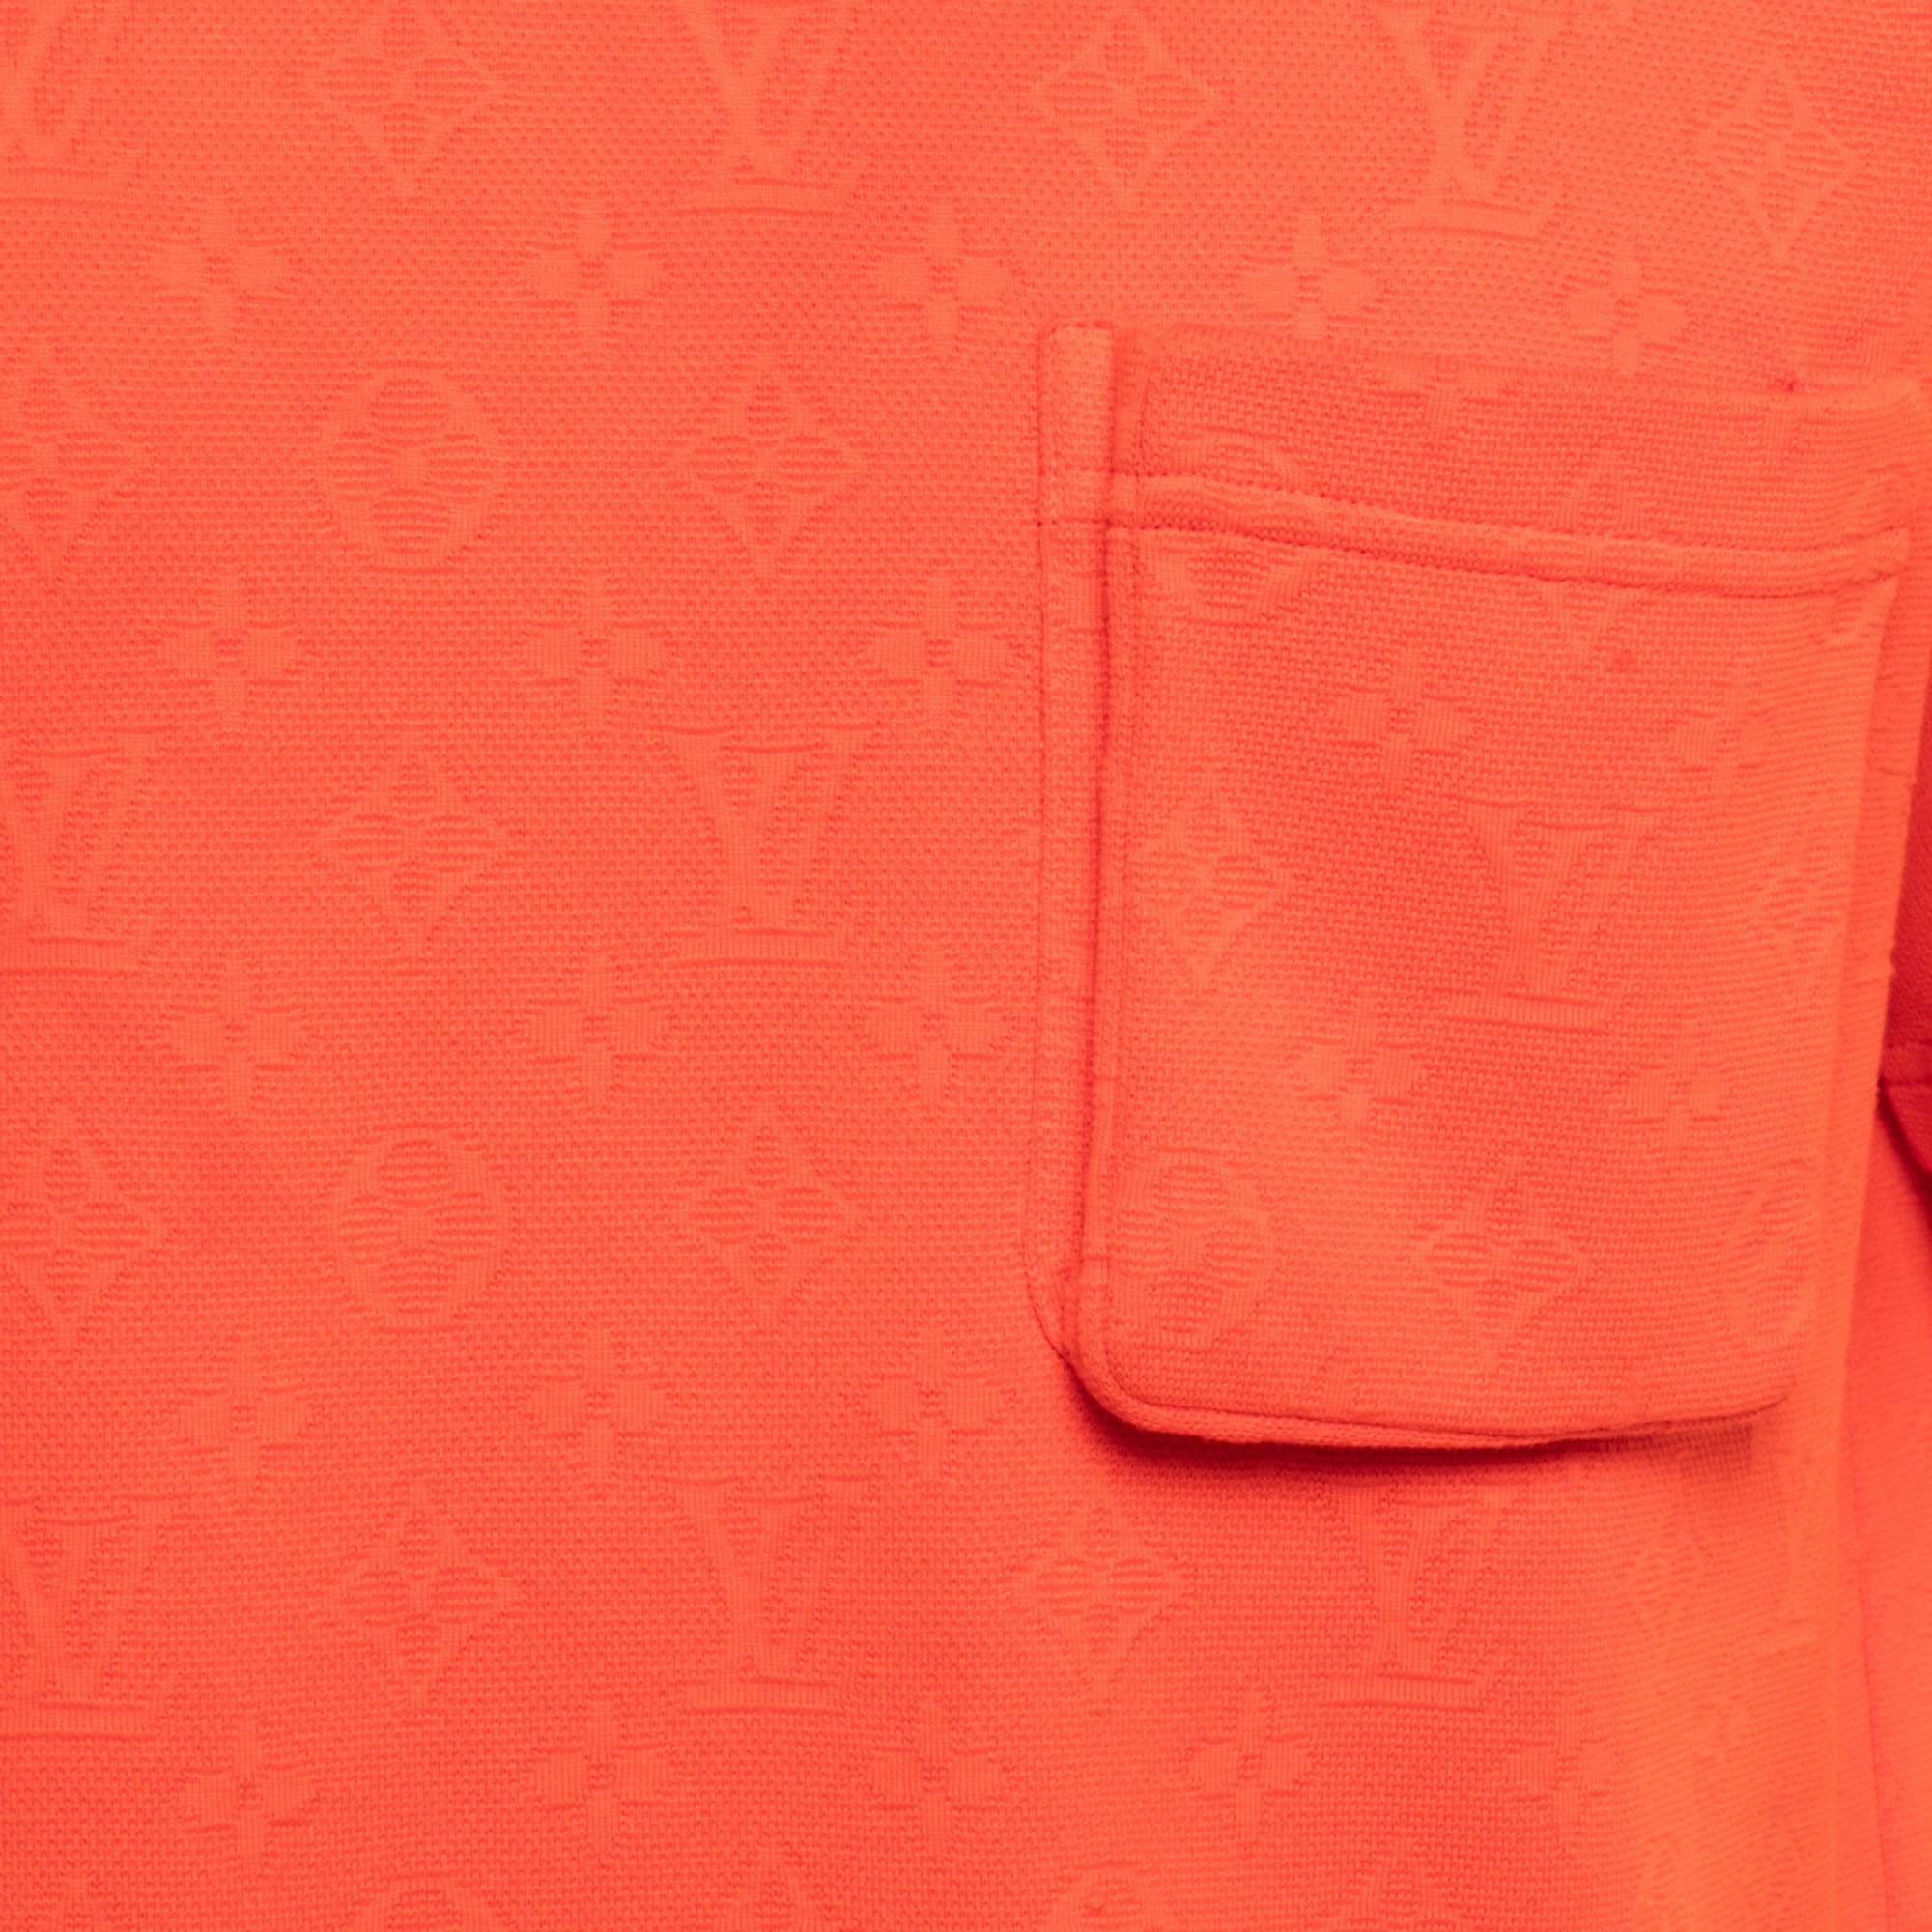 Louis Vuitton Orange Monogram Cotton Pique Crew Neck Half Sleeve T